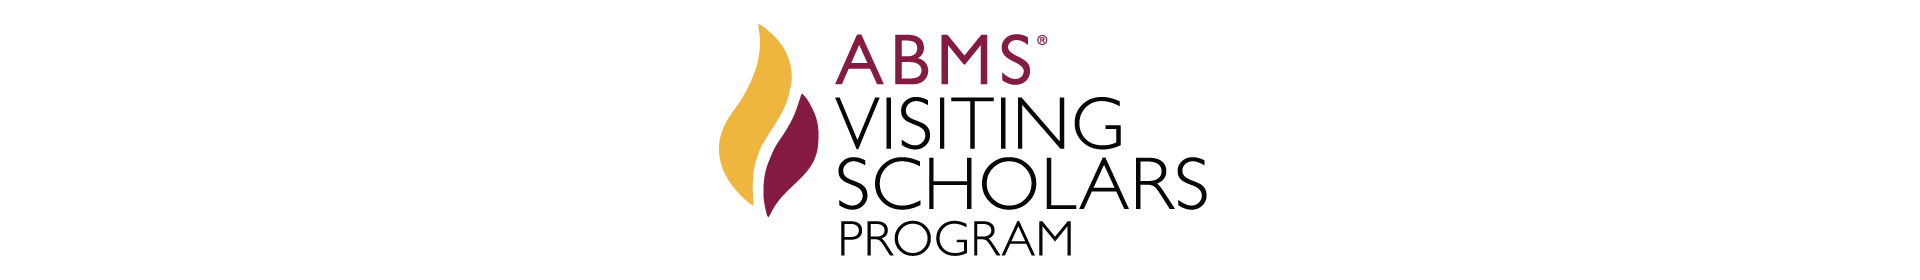 ABMS Visiting Scholars Program Event Banner